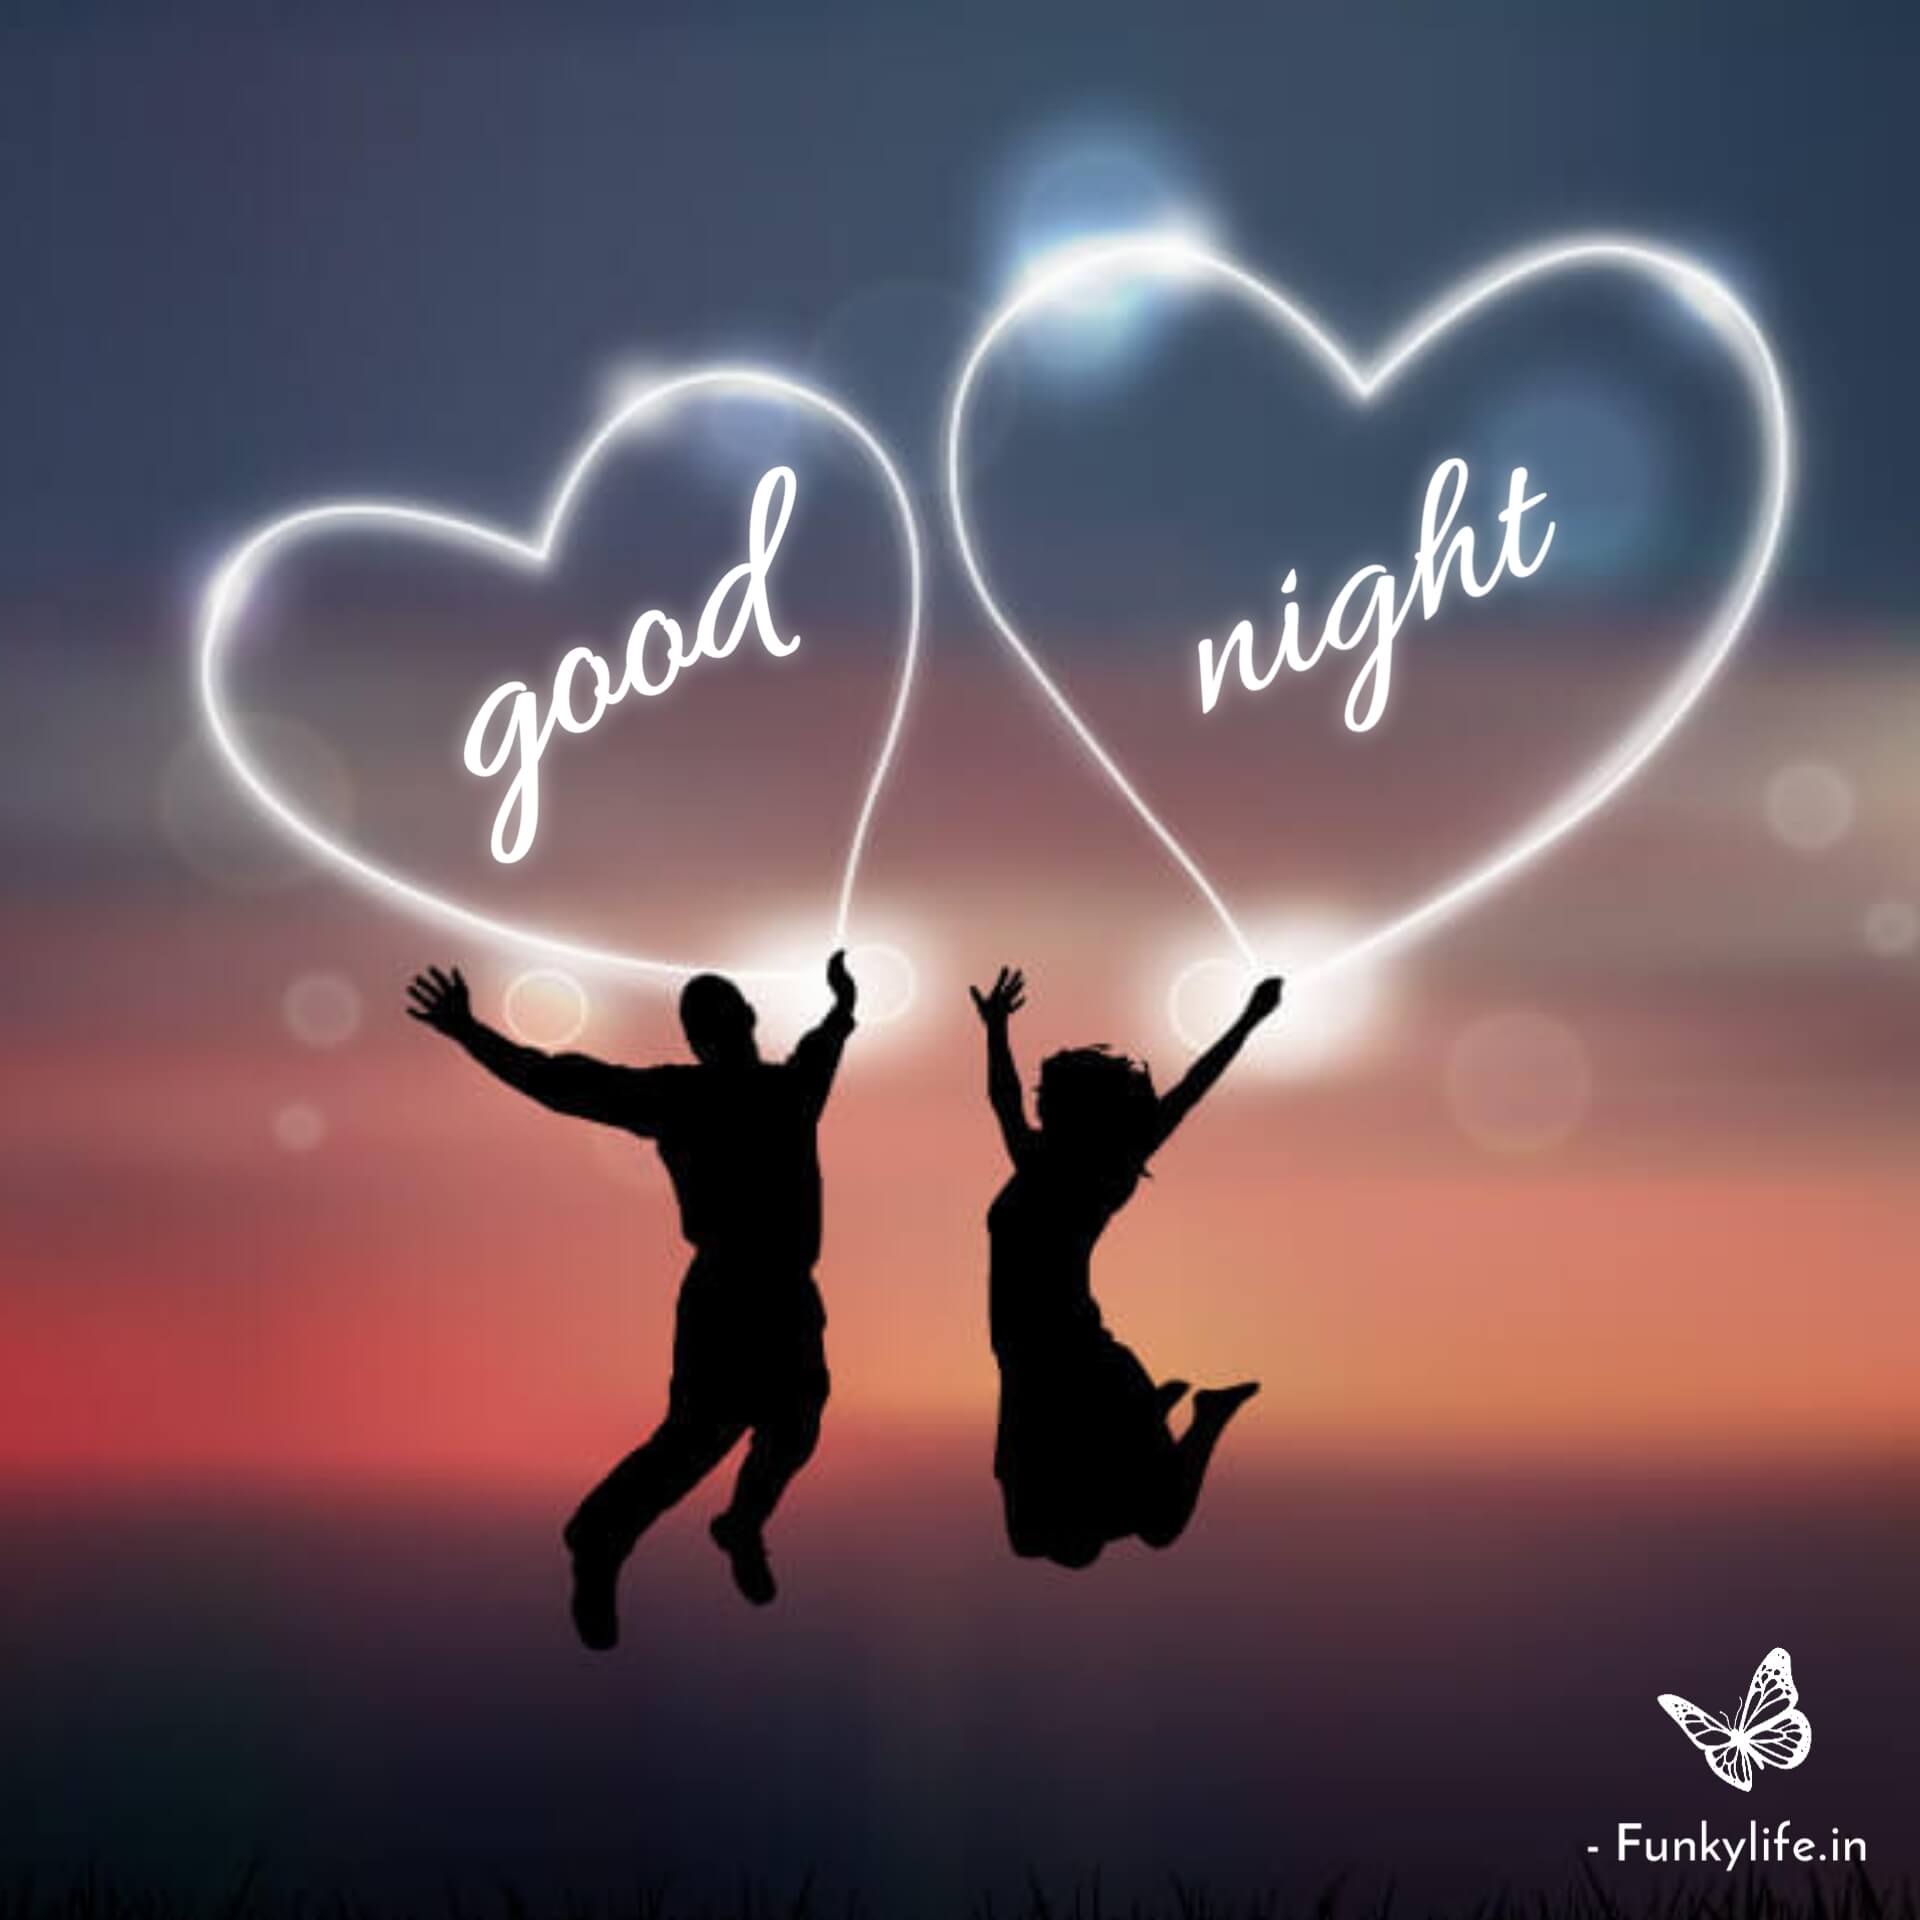 Good Night Image with Love